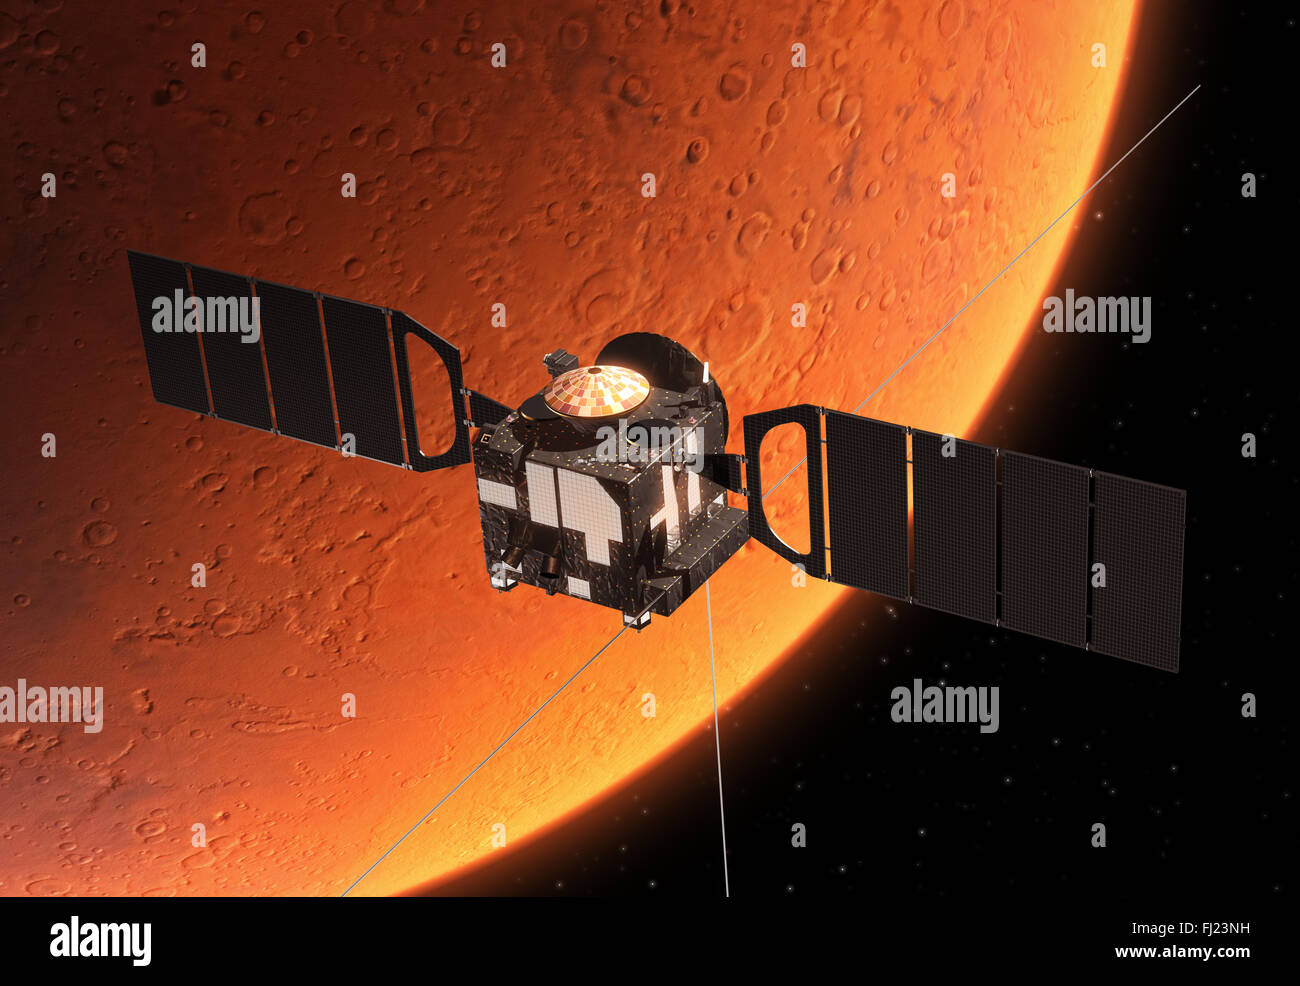 Interplanetary Space Station Orbiting Planet Mars Stock Photo